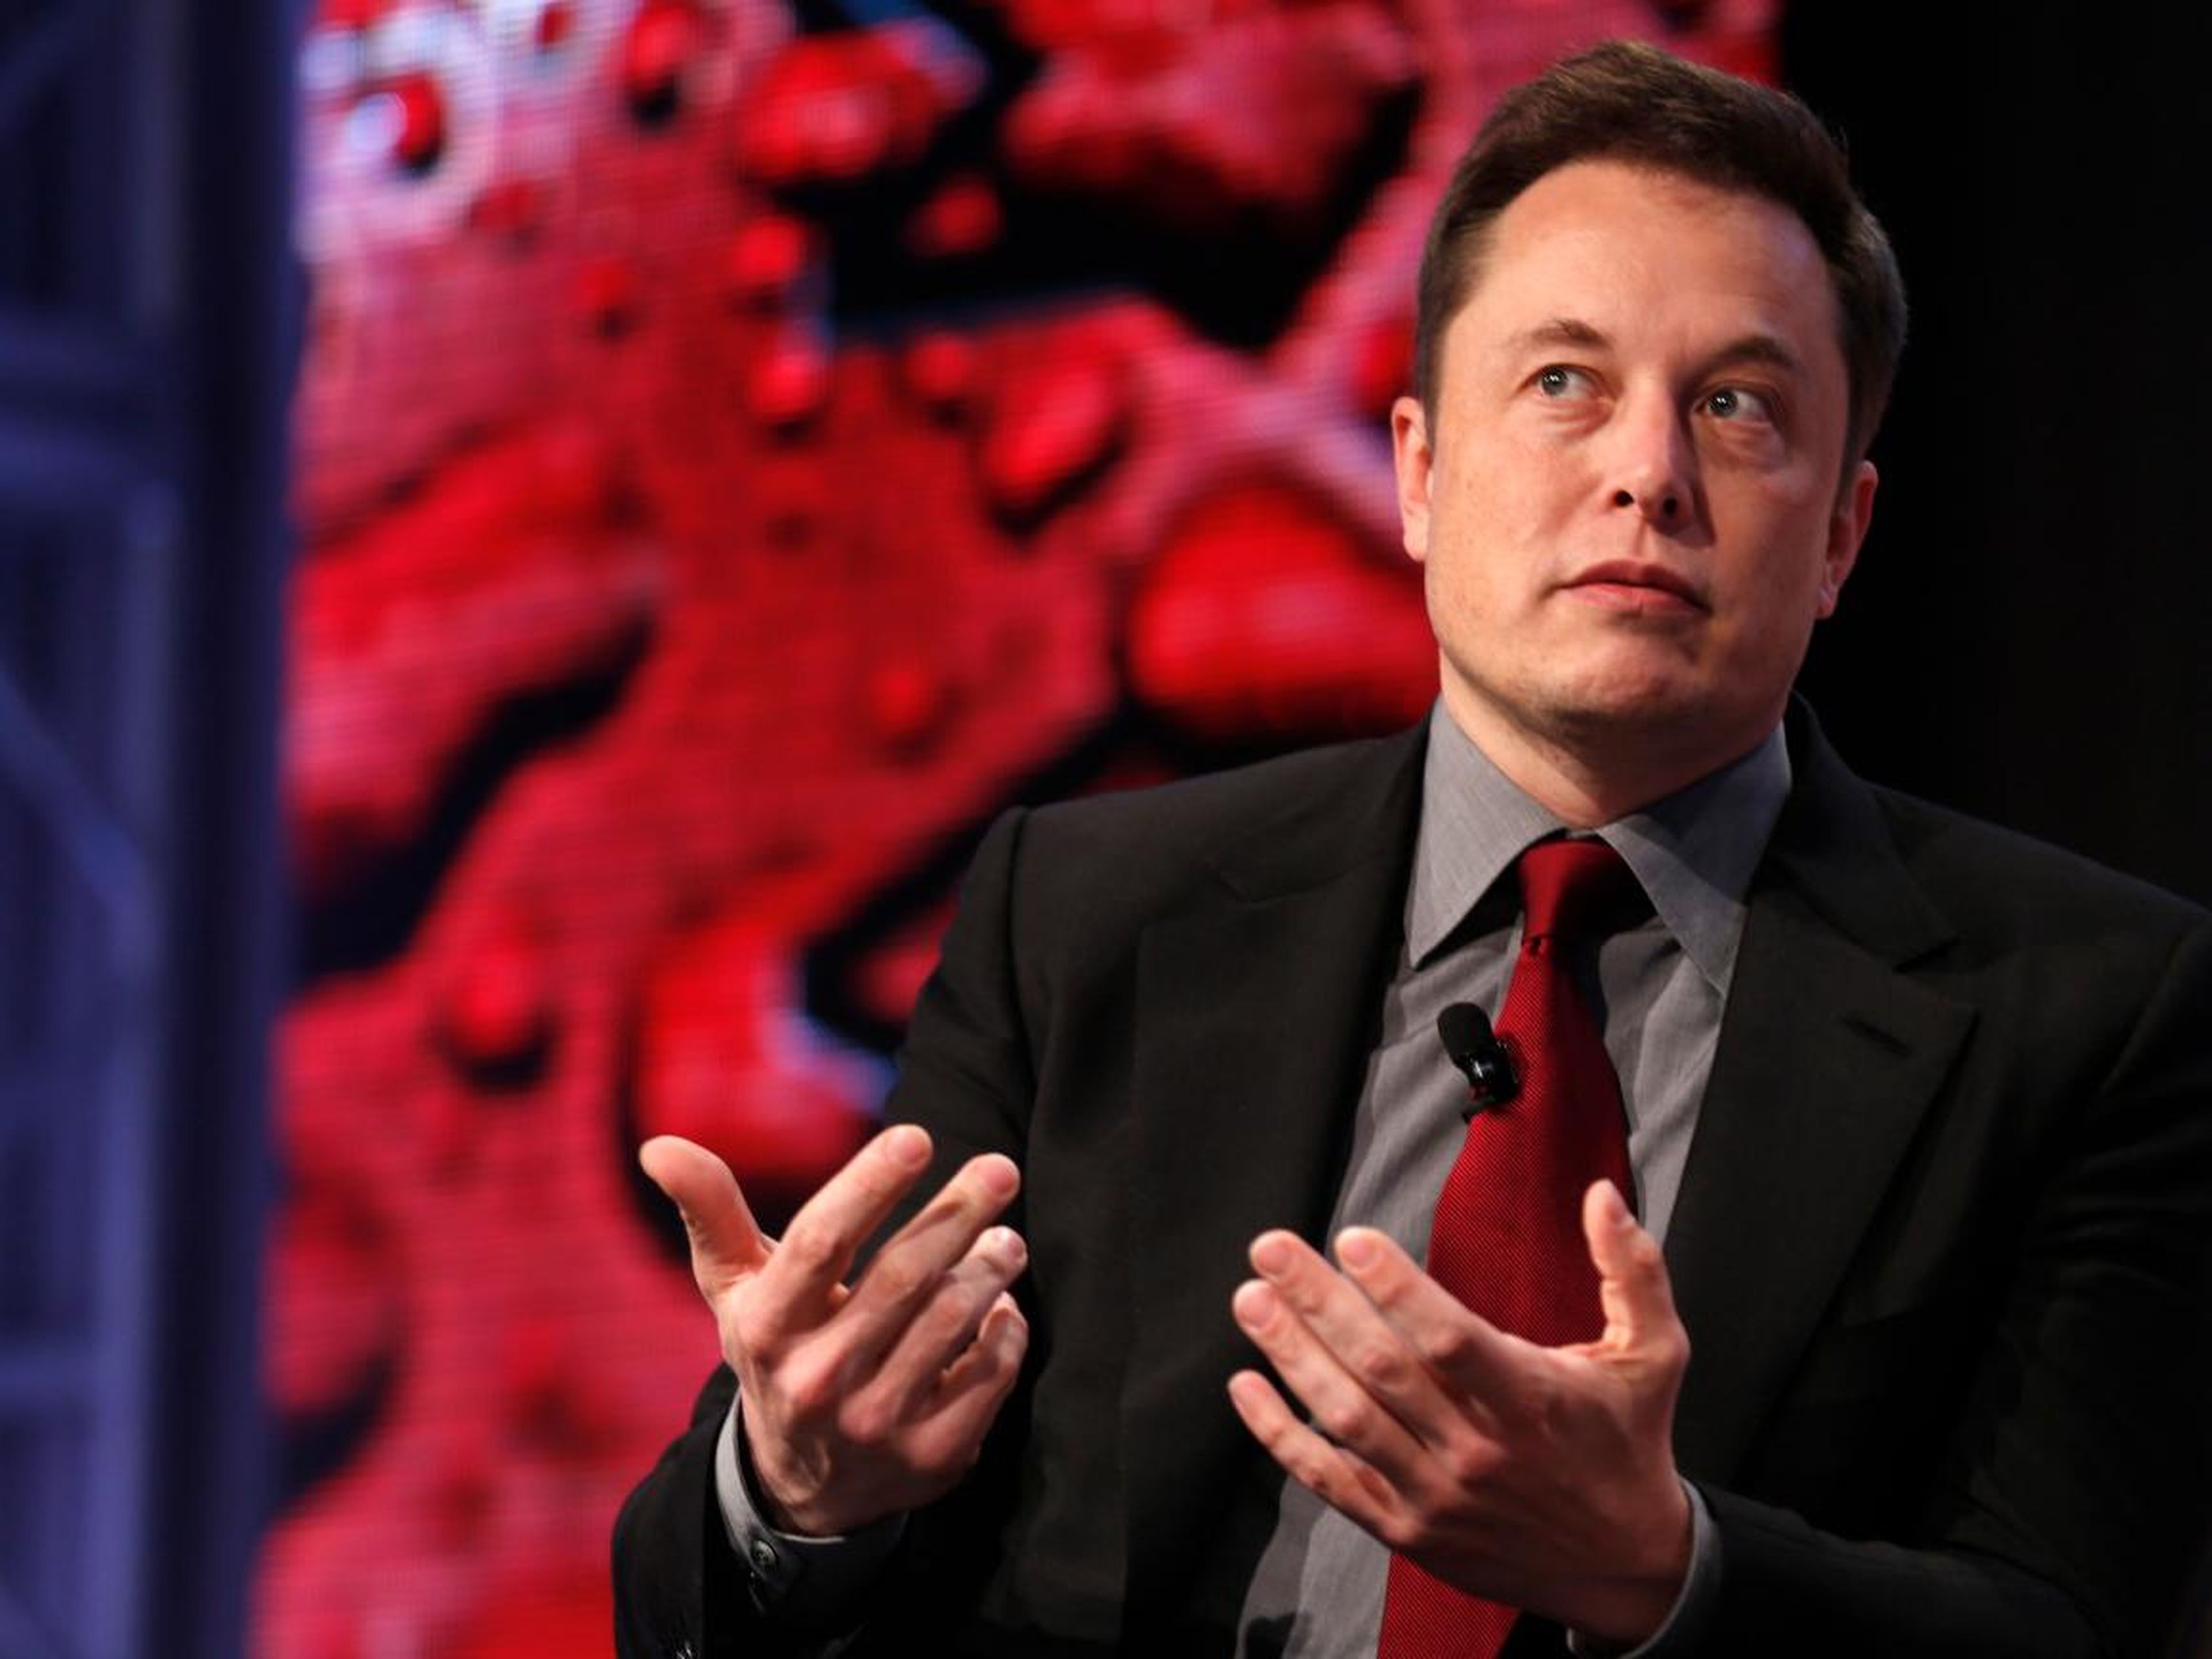 Tesla CEO Elon Musk's attempt at damage control may backfire.